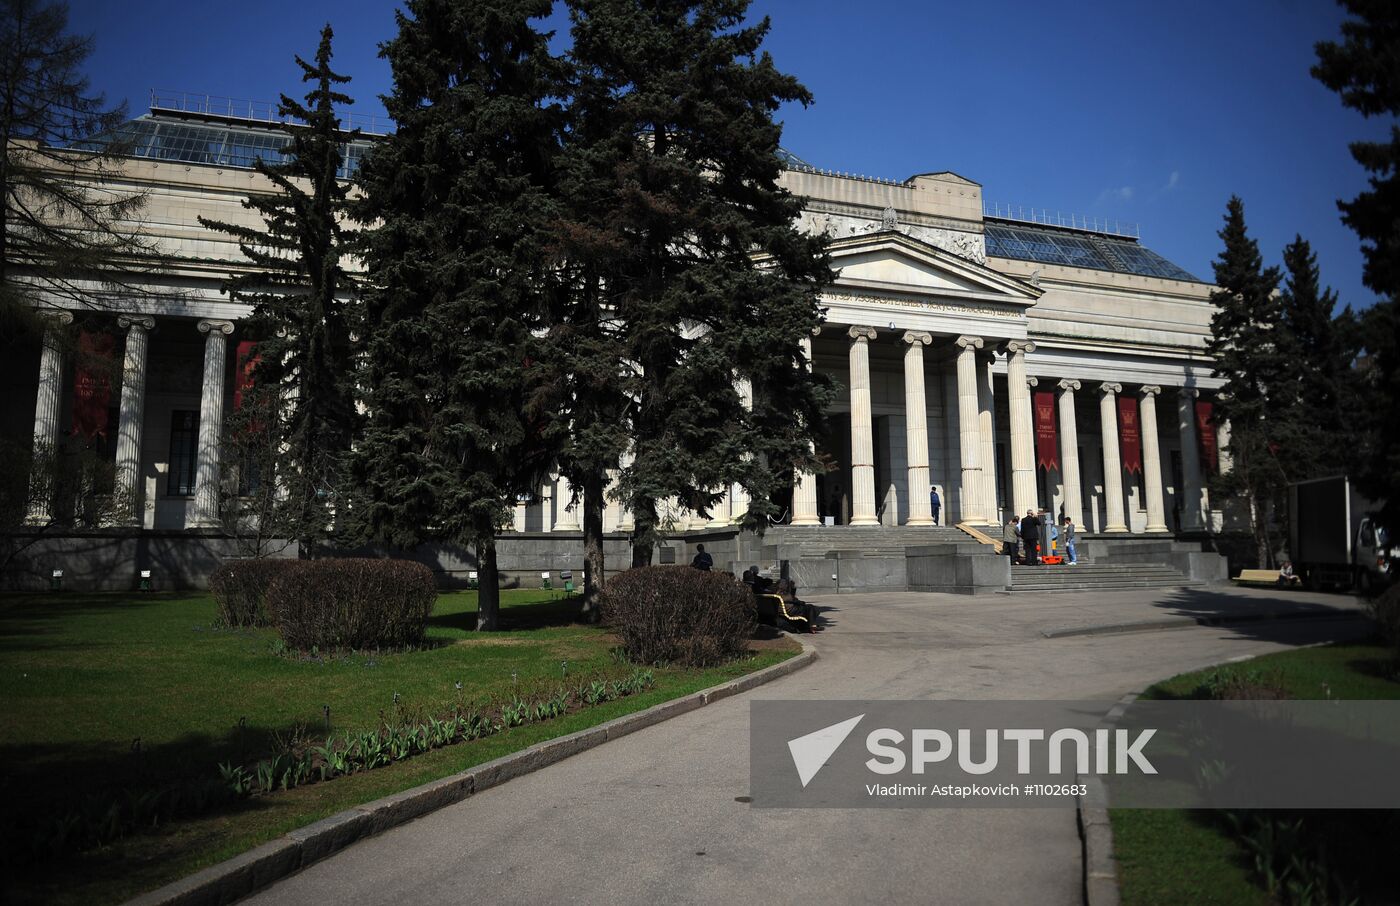 State Pushkin Fine Arts Museum building